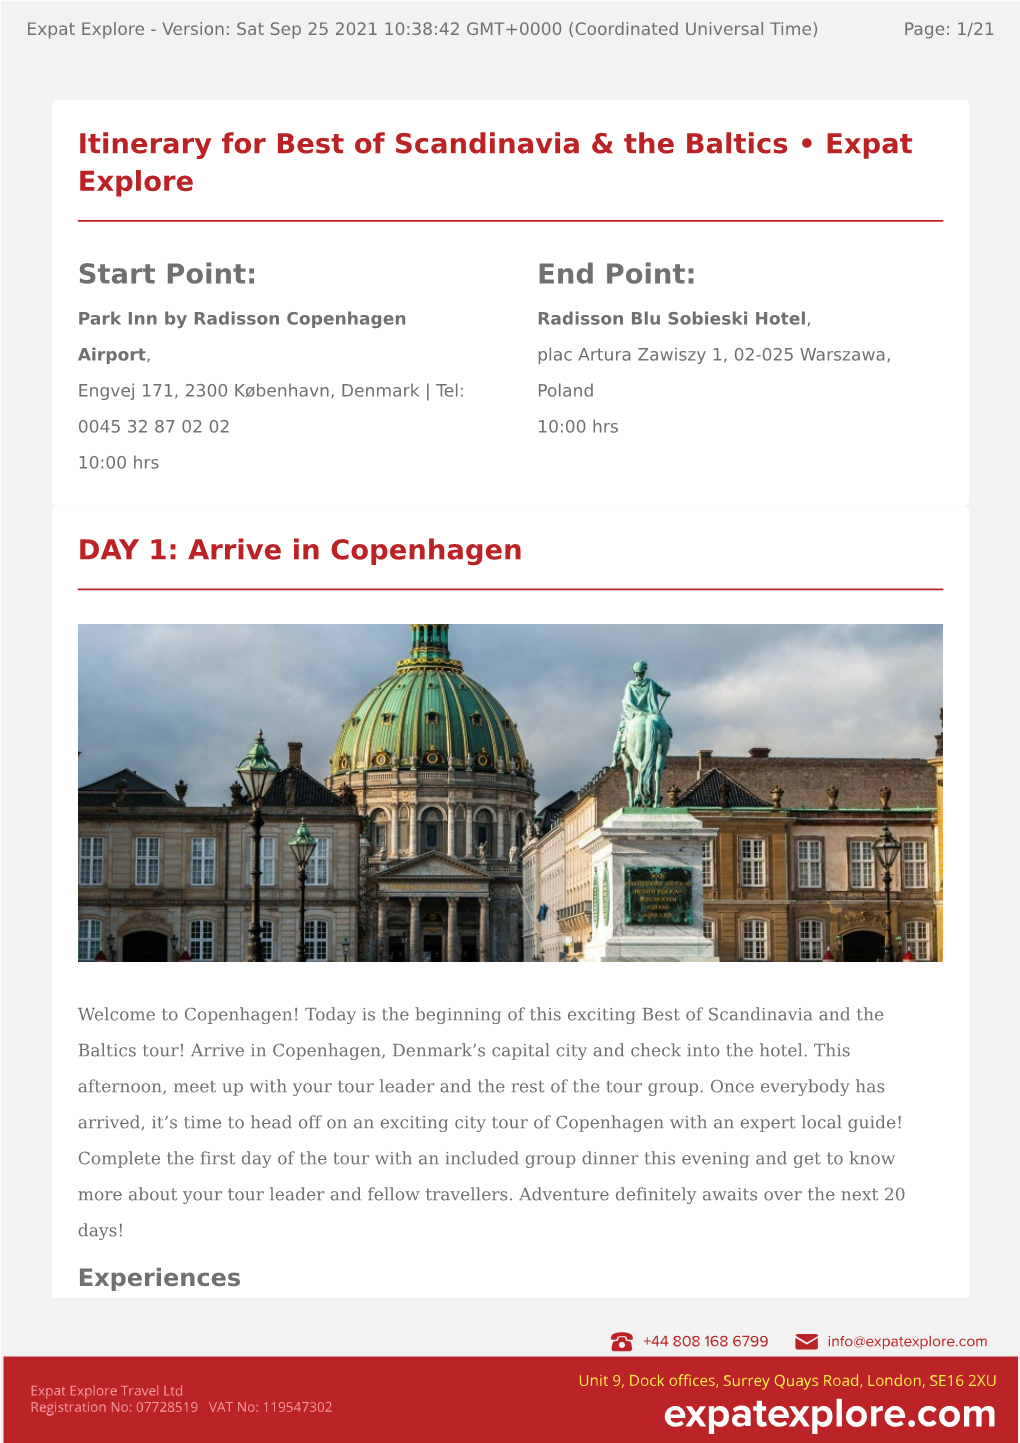 Arrive in Copenhagen Itinerary for Best of Scandinavia & the Baltics • Expat Explore Start Point